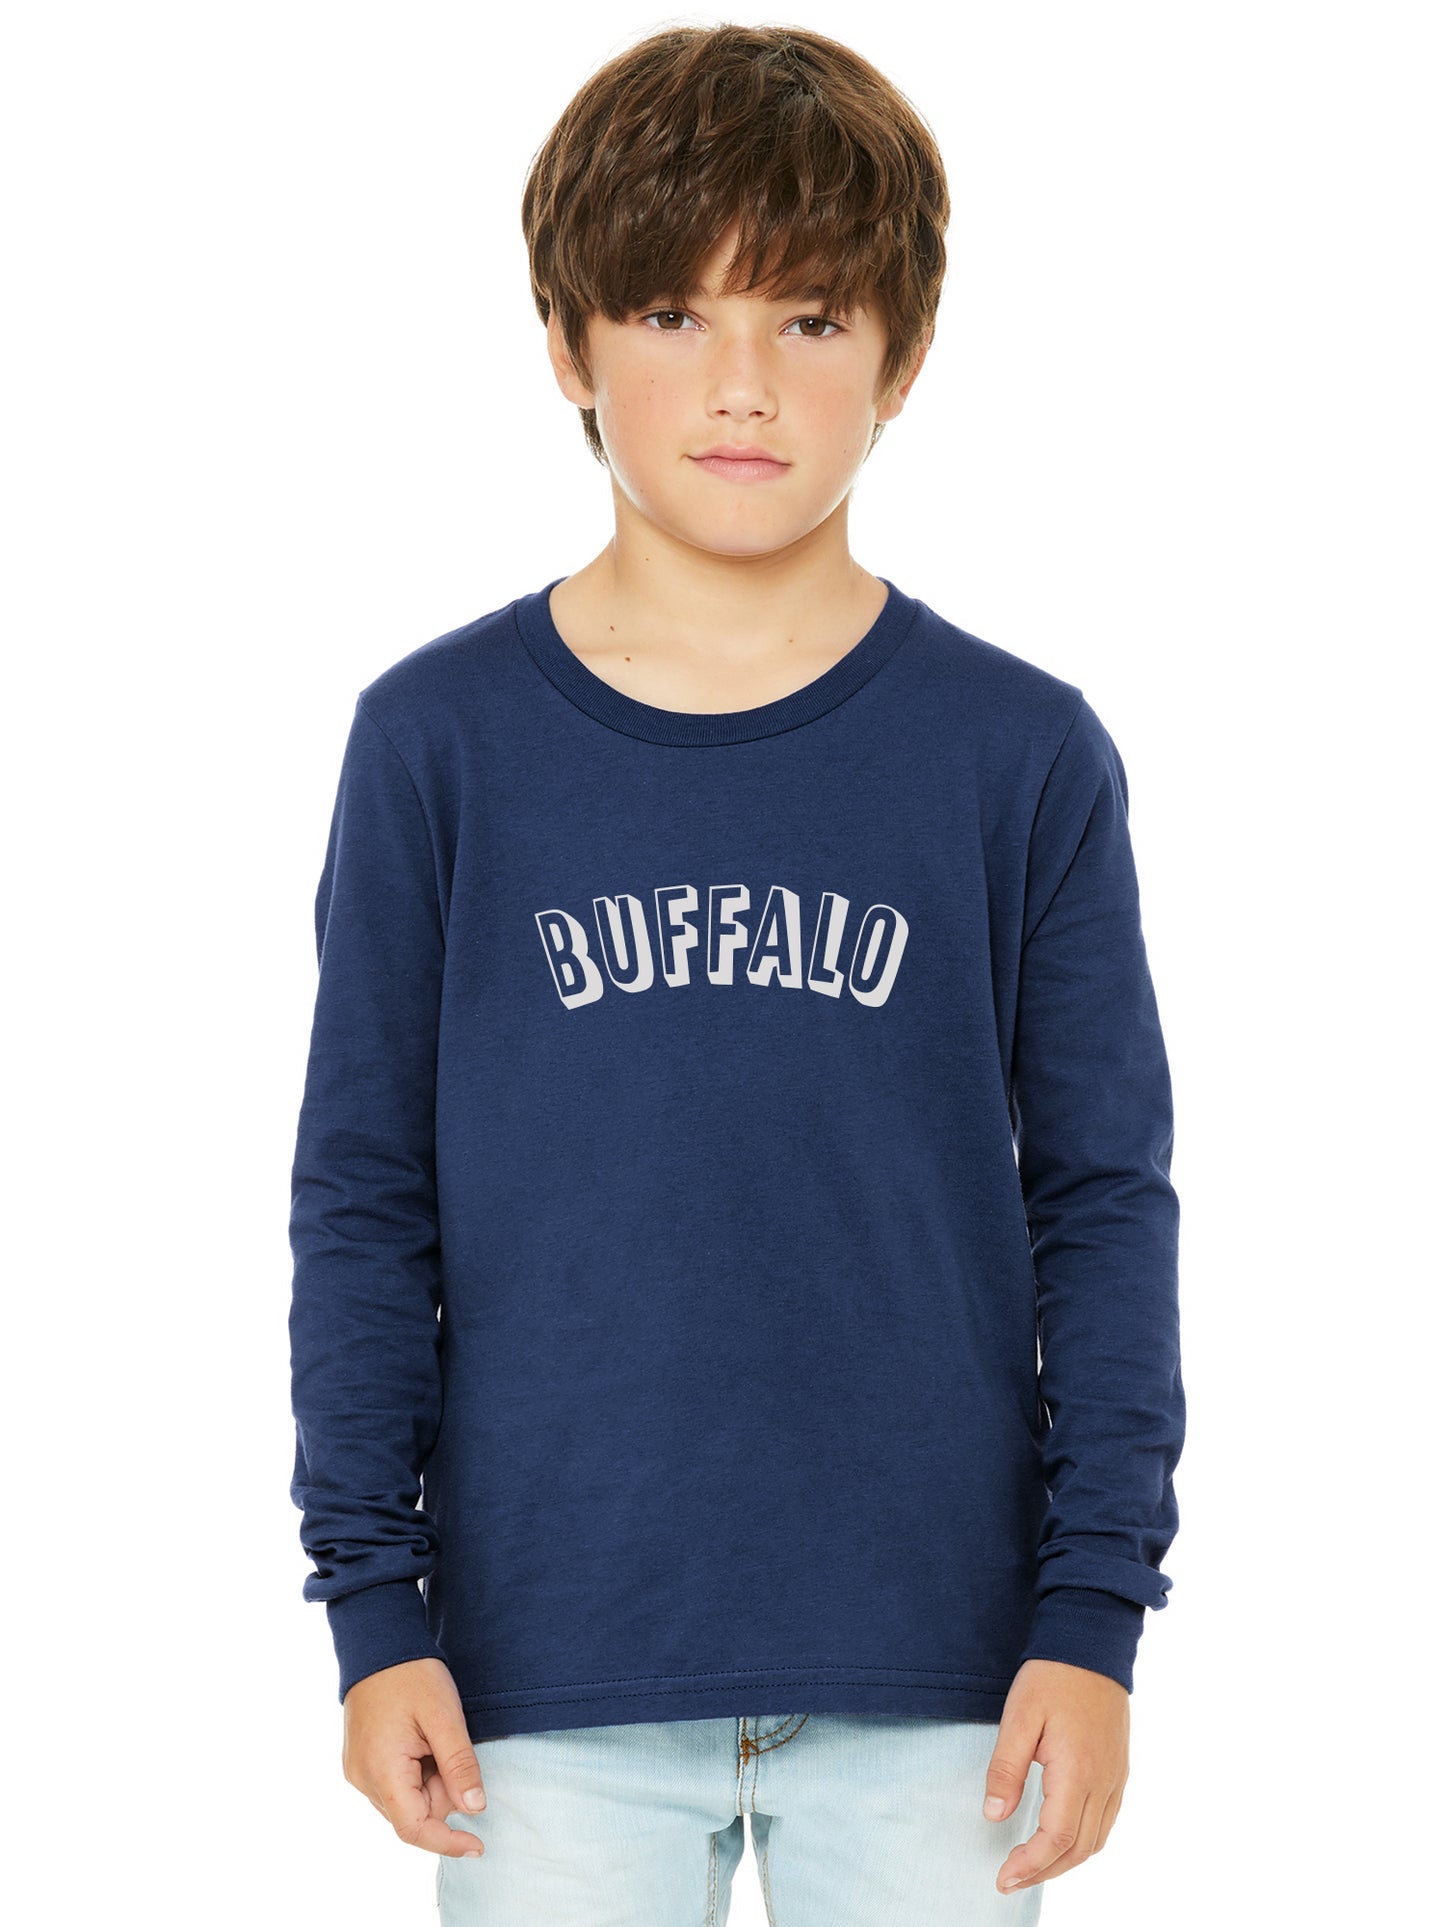 Daxton Youth Long Sleeve Buffalo Basic Tshirt